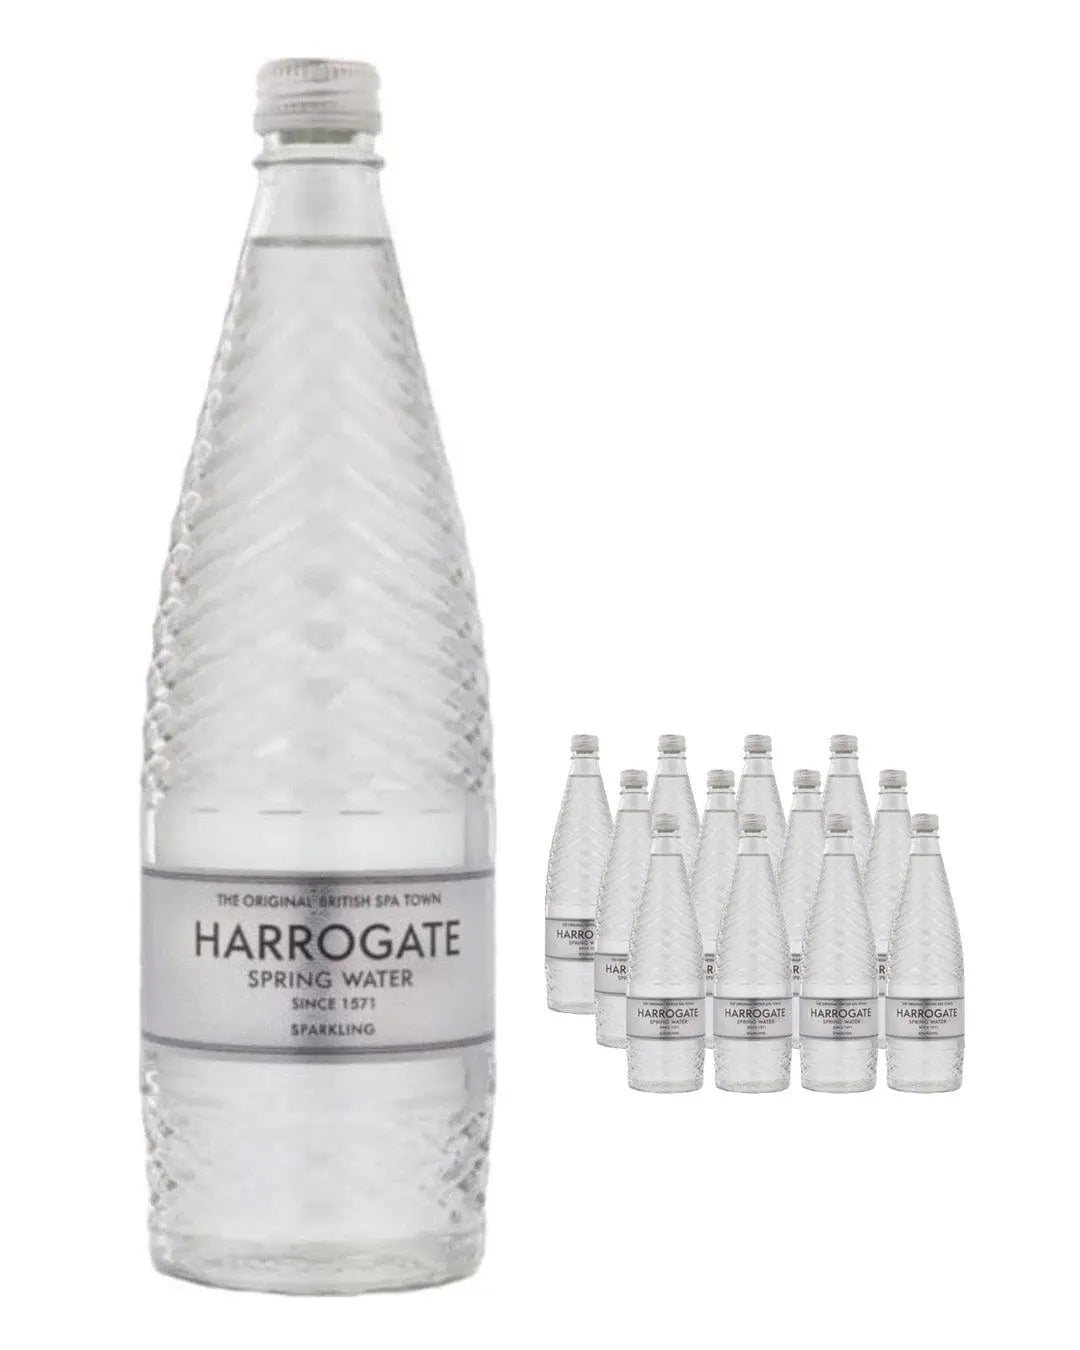 Harrogate Spring Sparkling Water Glass Bottle Multipack, 12 x 750 ml Water